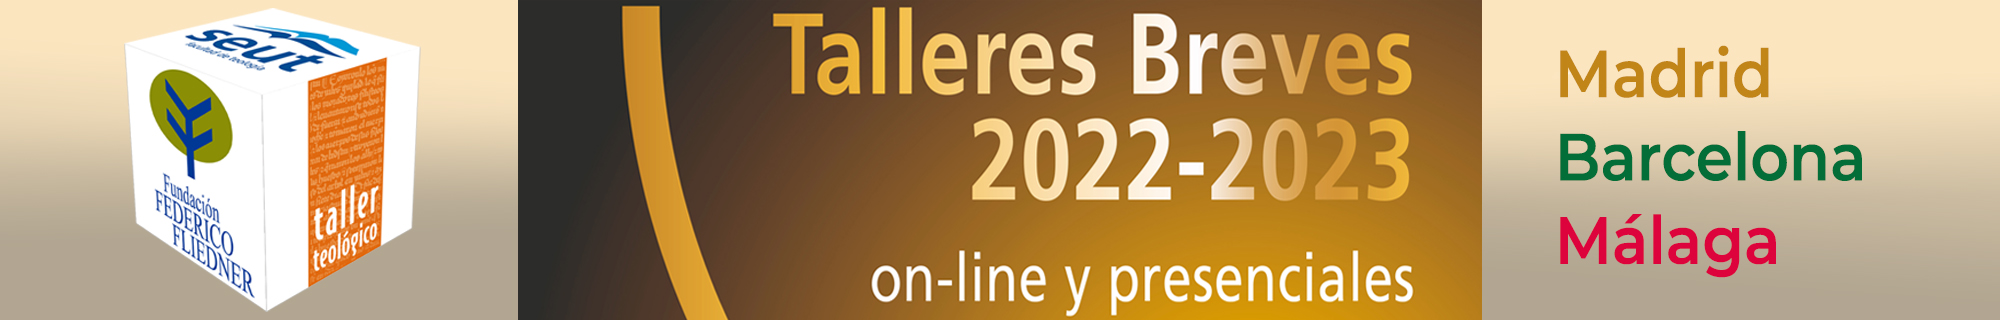 Talleres Breves 2022-2023 del Taller Teológico